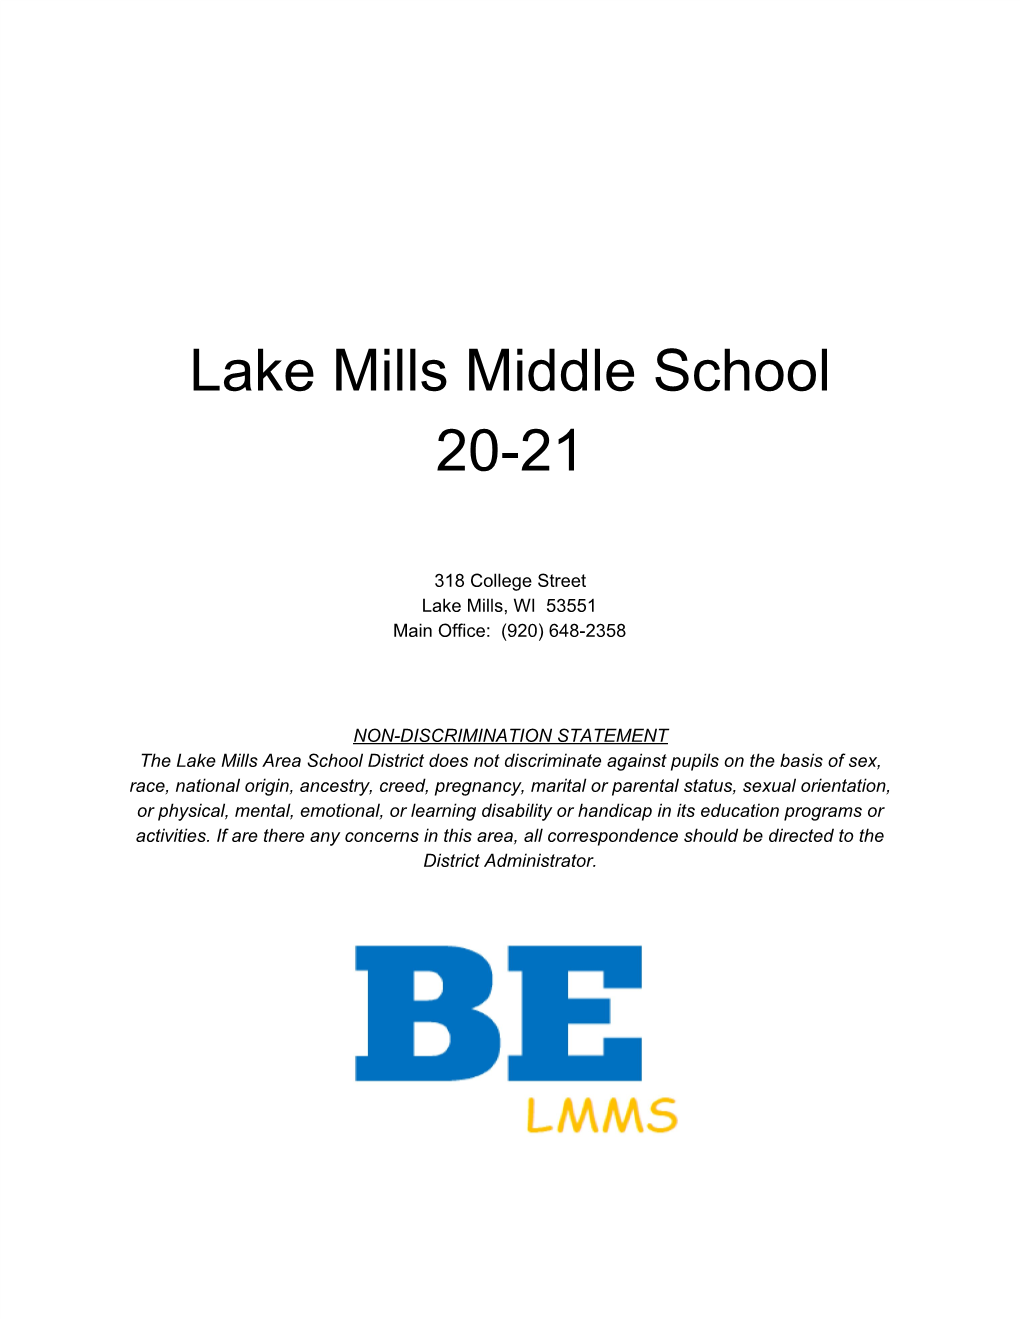 Lake Mills Middle School 20-21